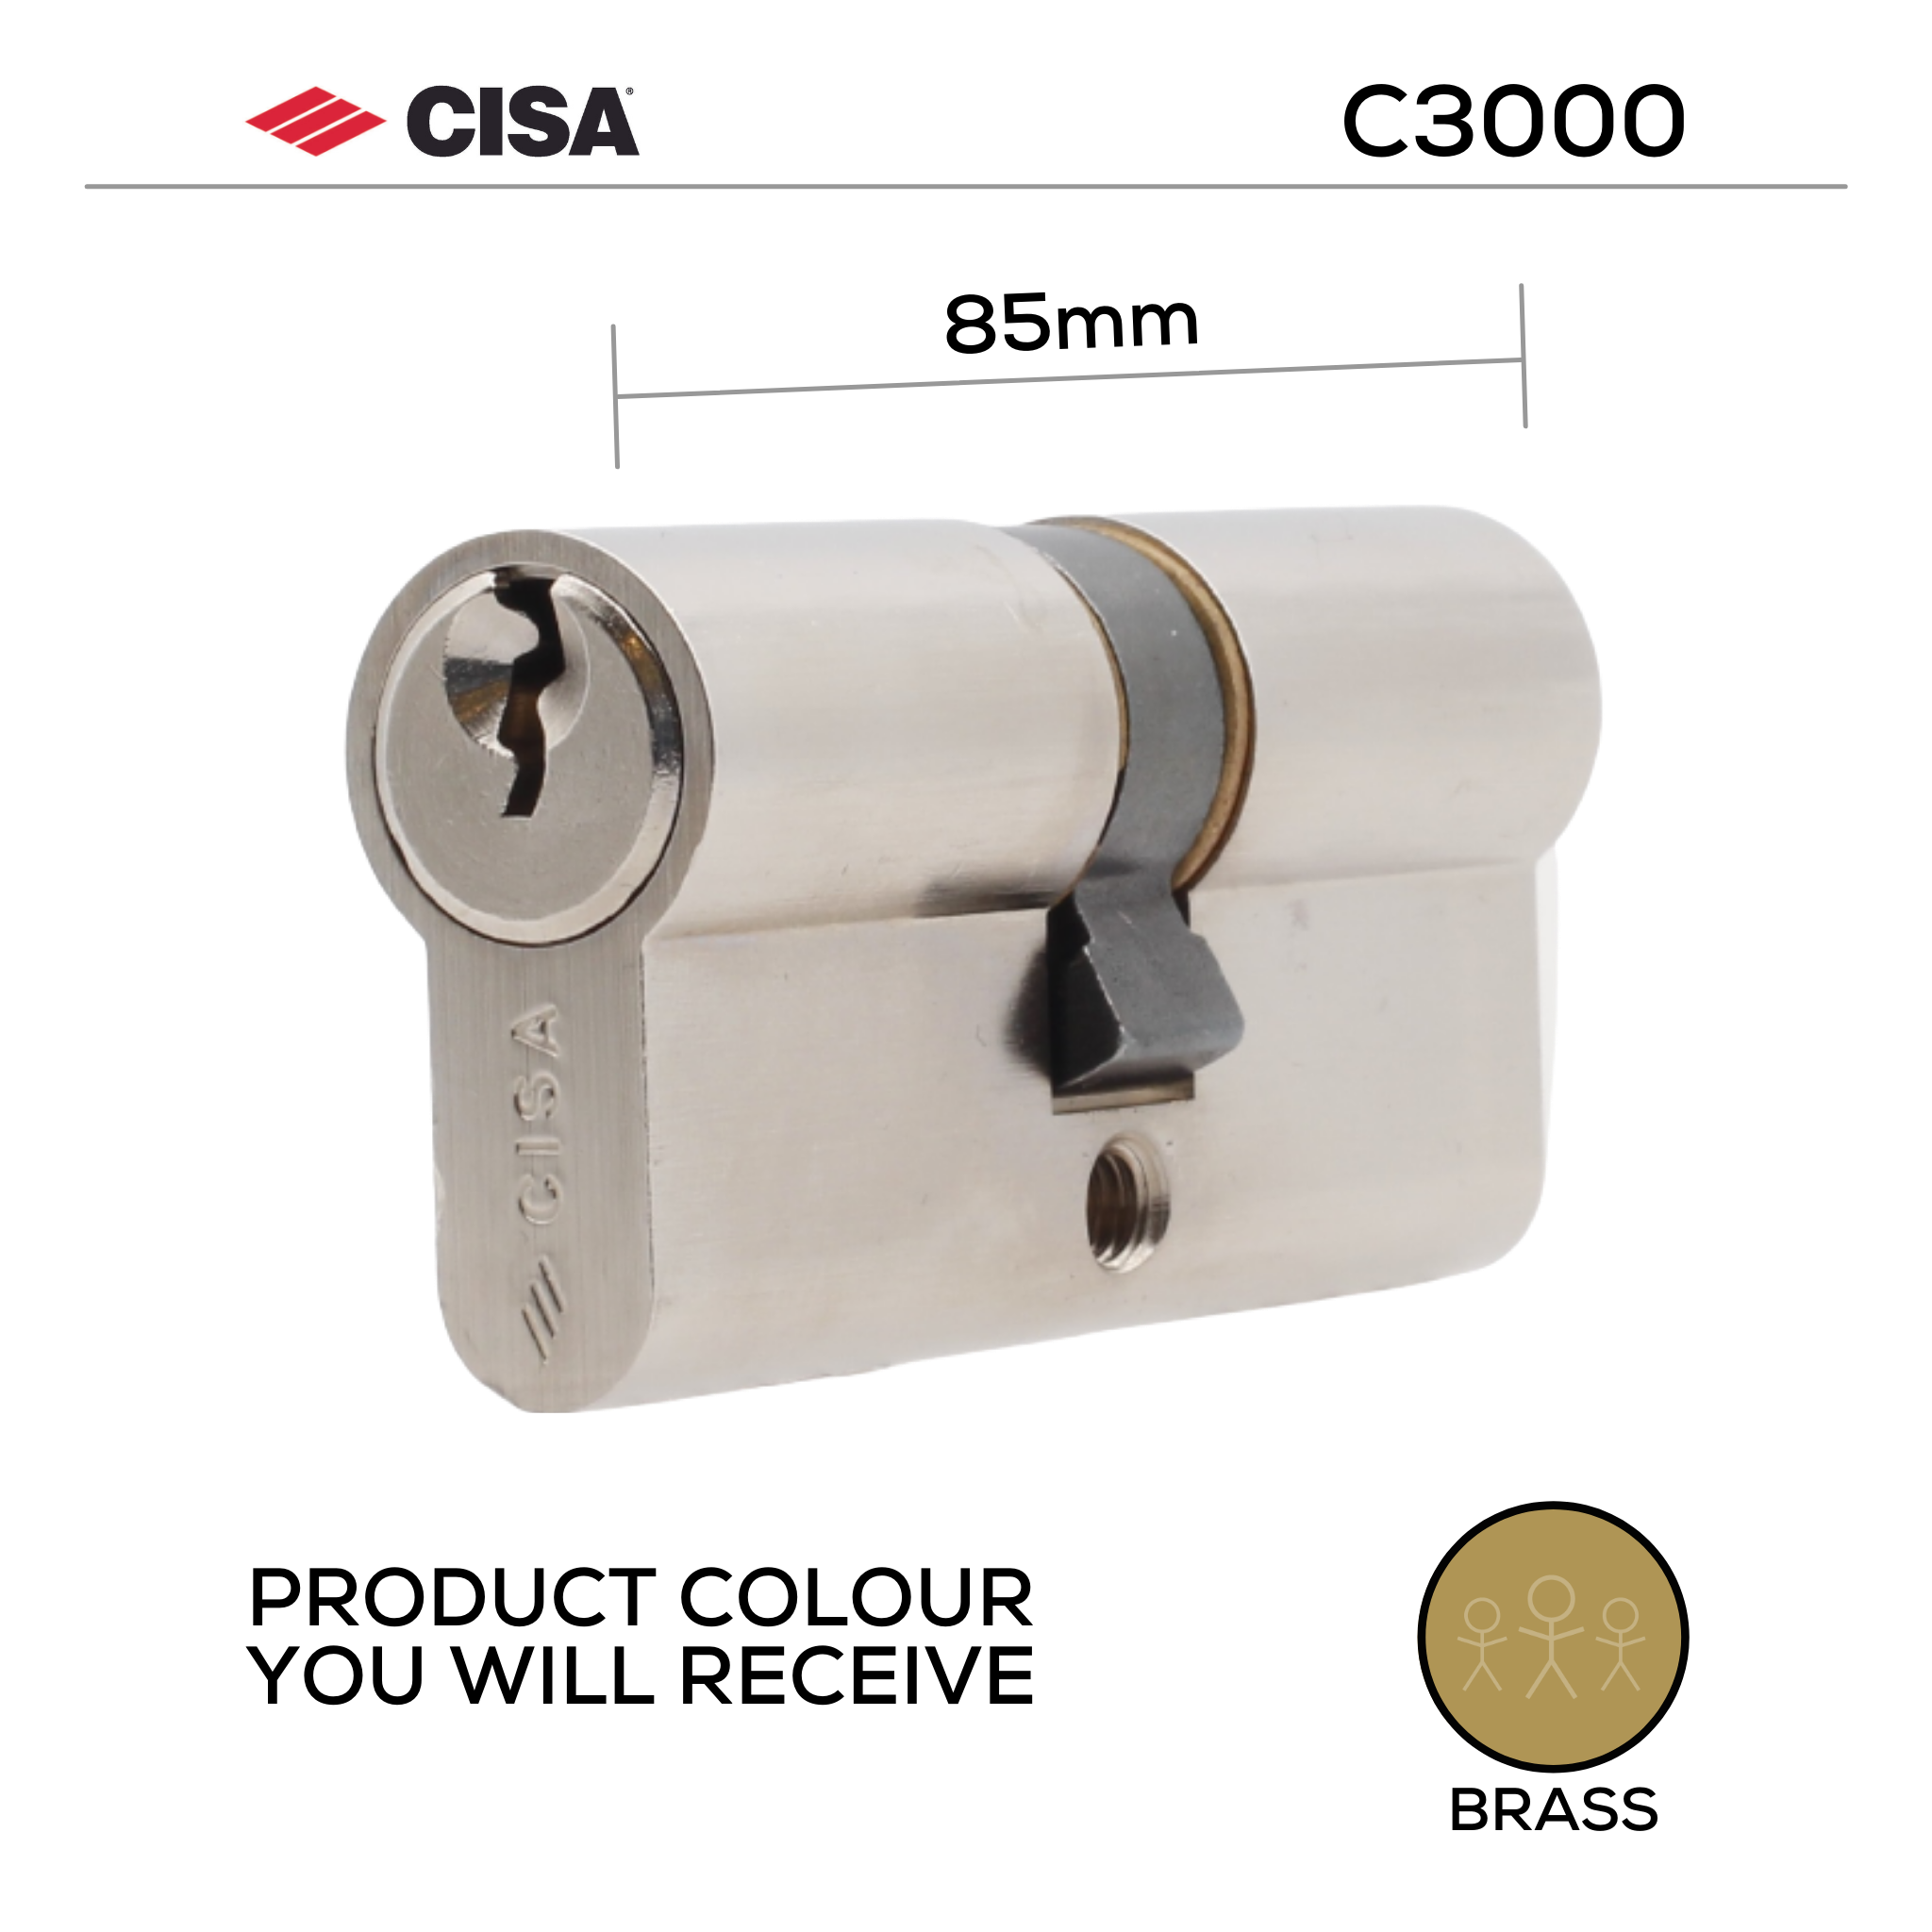 0N310-46-00-KD, 85mm - 42.5/42.5, Double Cylinder, C3000, Key to Key, Keyed to Differ (Standard), 3 Keys, 6 Pin, Brass, CISA